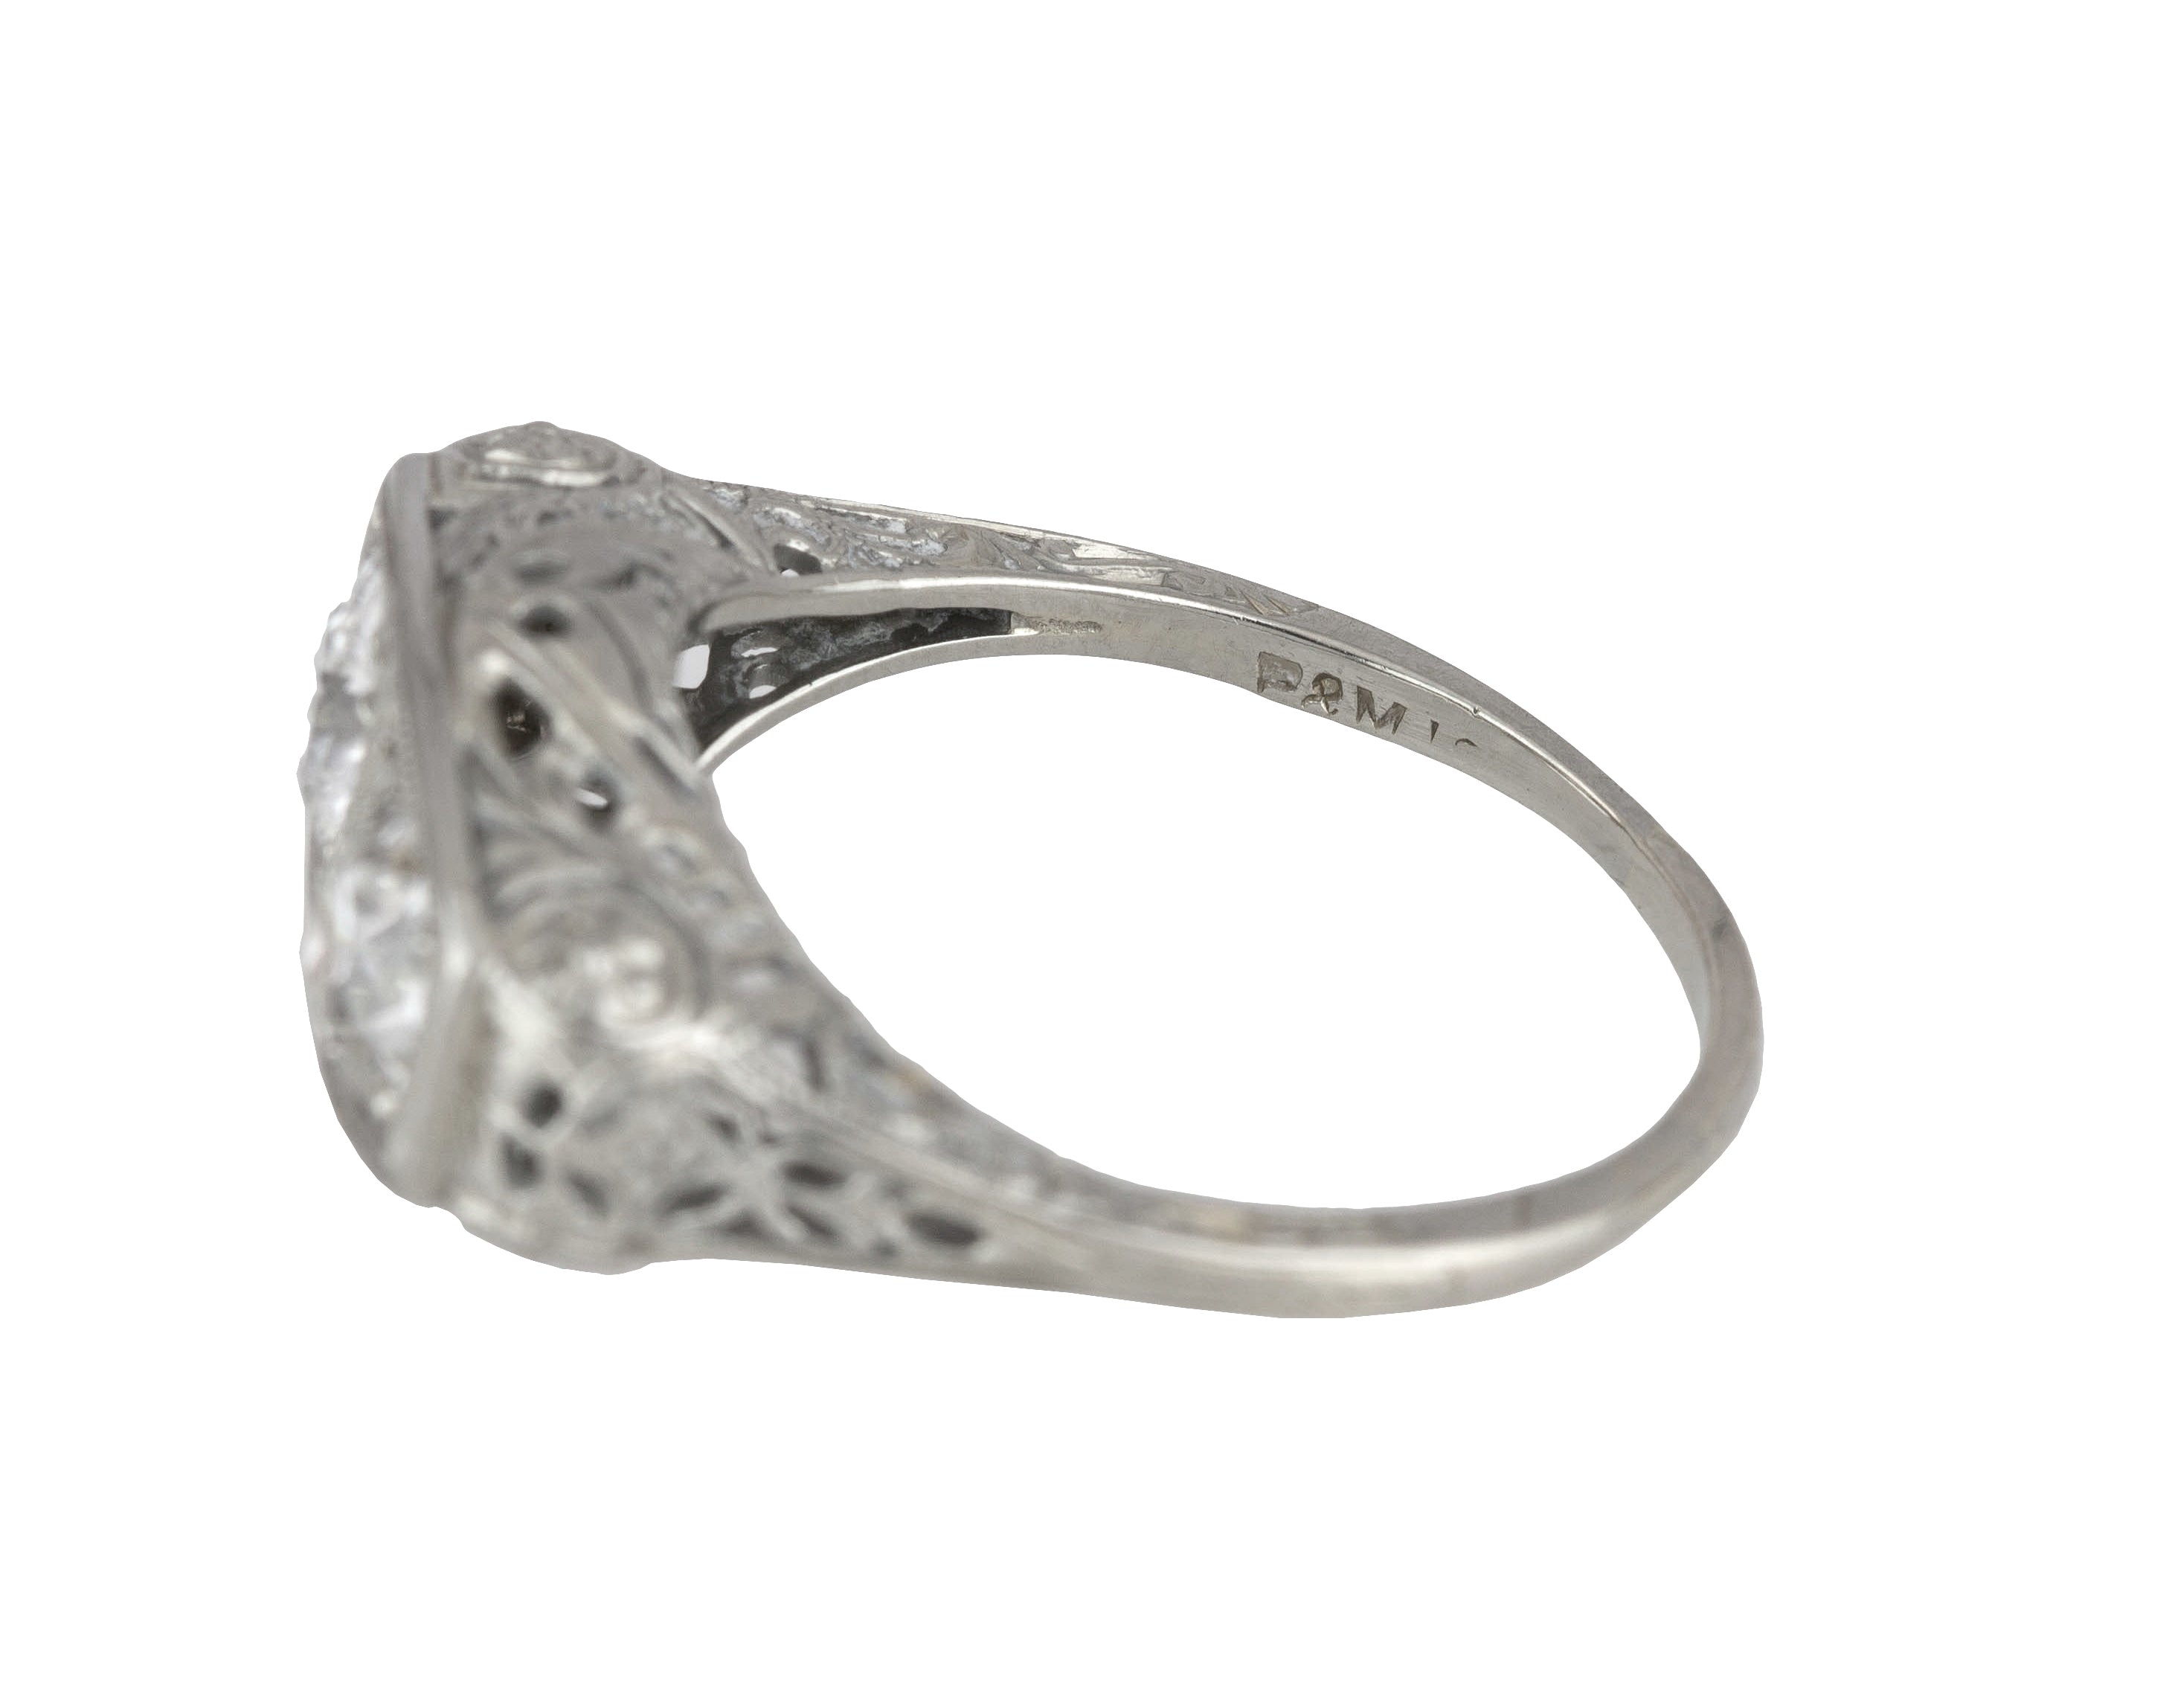 Art Deco White Gold 1.04CTW Old European/Old Mine Cut Diamond Engagement Ring